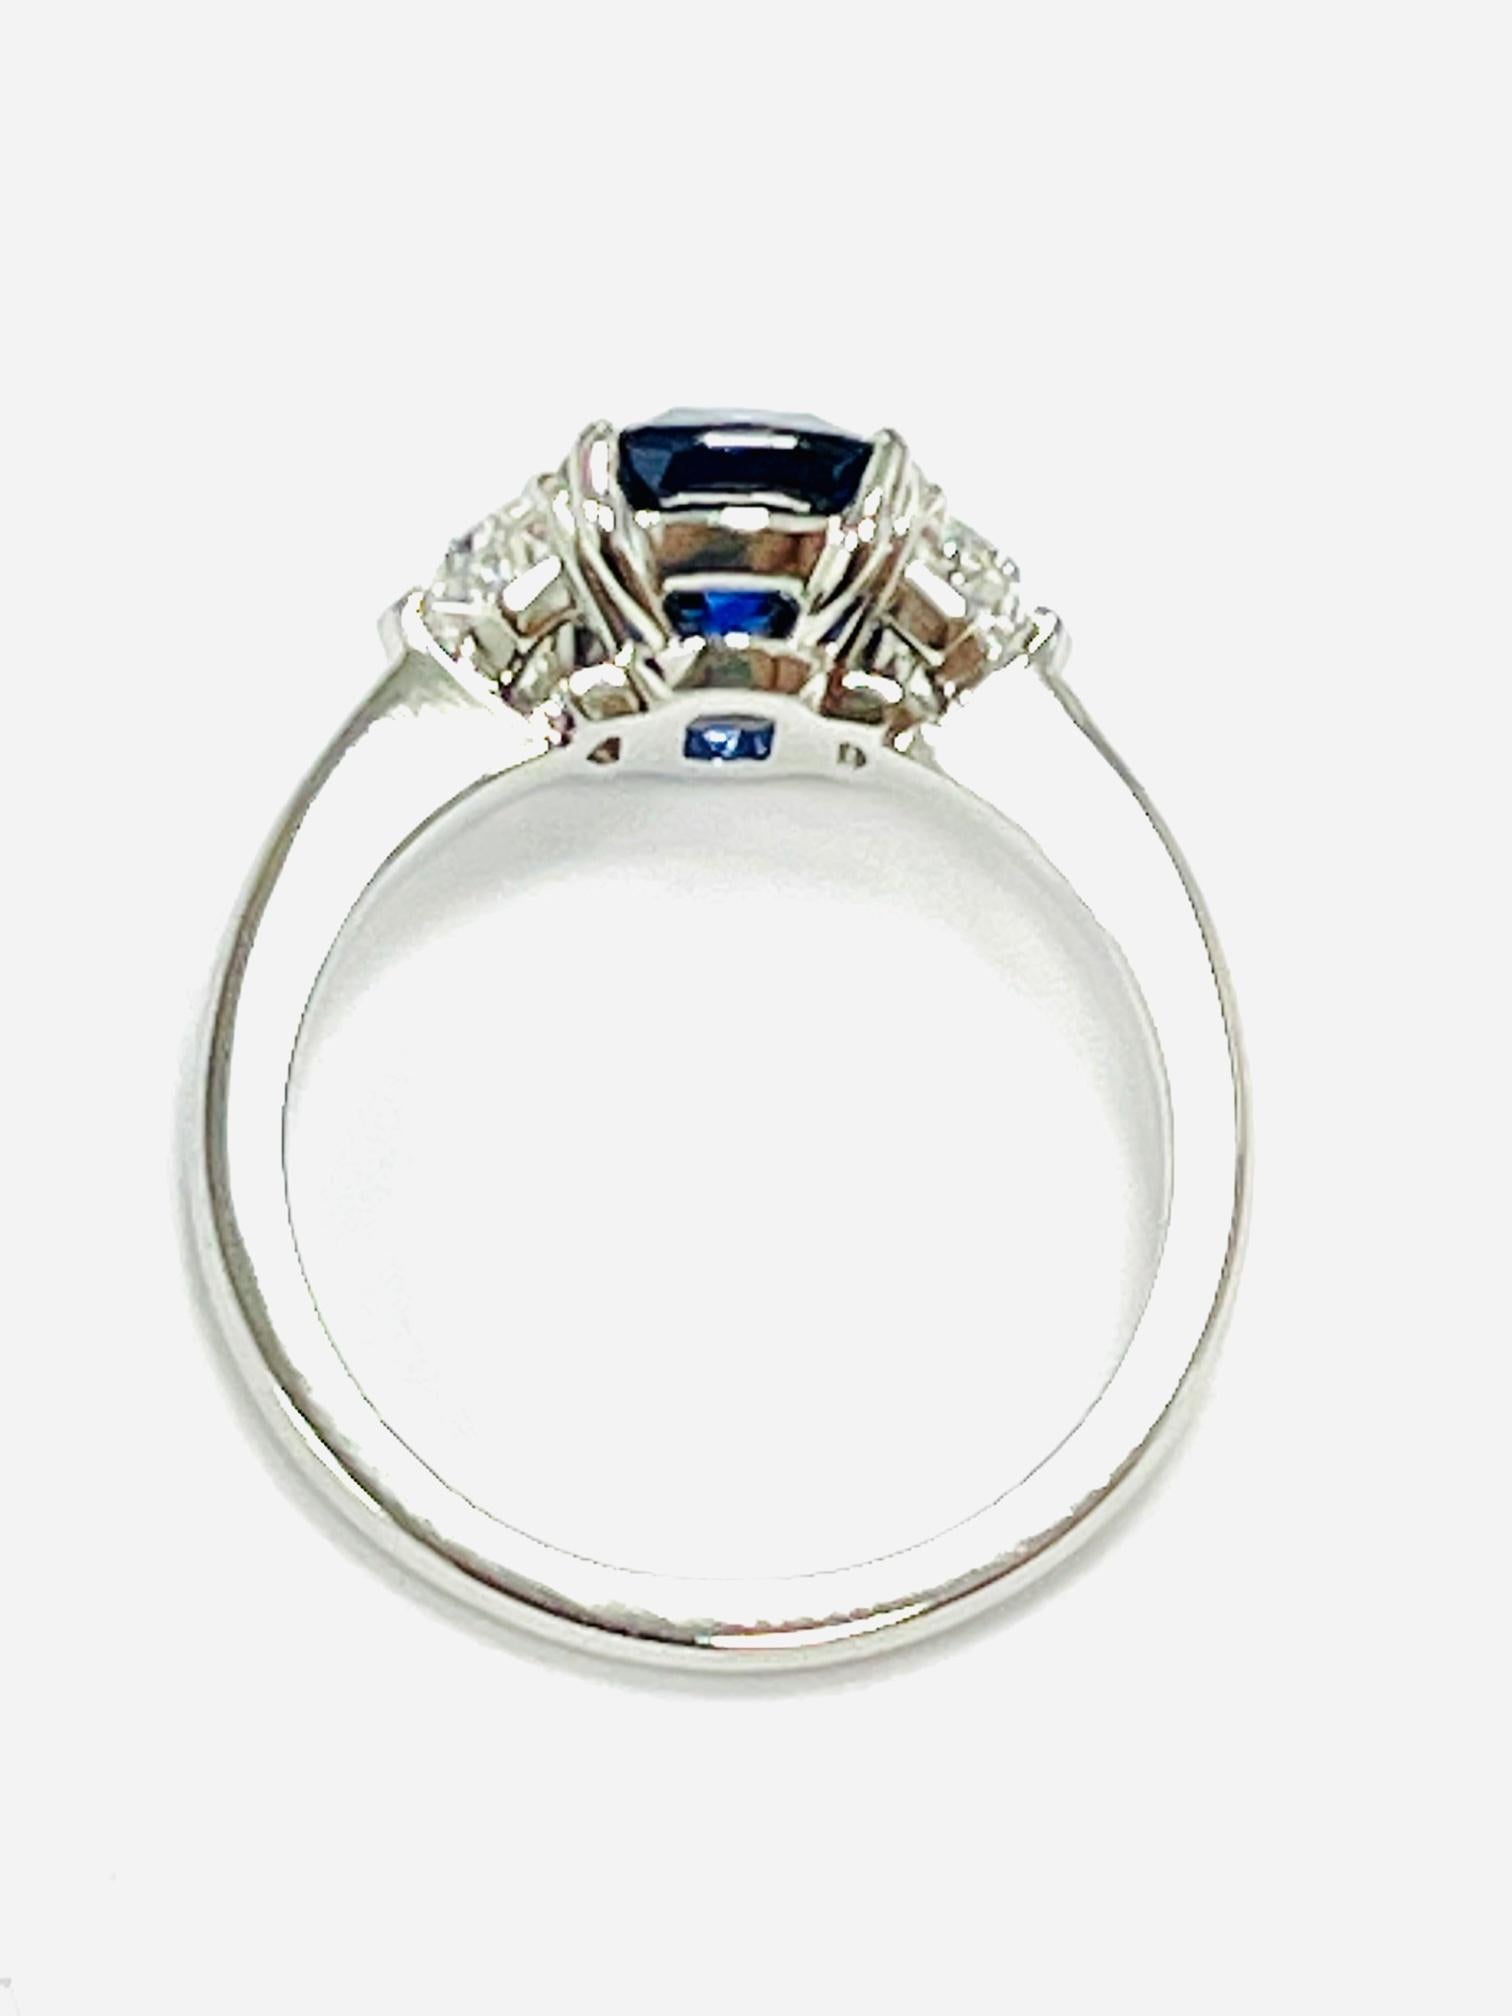 Modern 3.06 Carat Cushion Sapphire Diamond Cocktail Ring For Sale